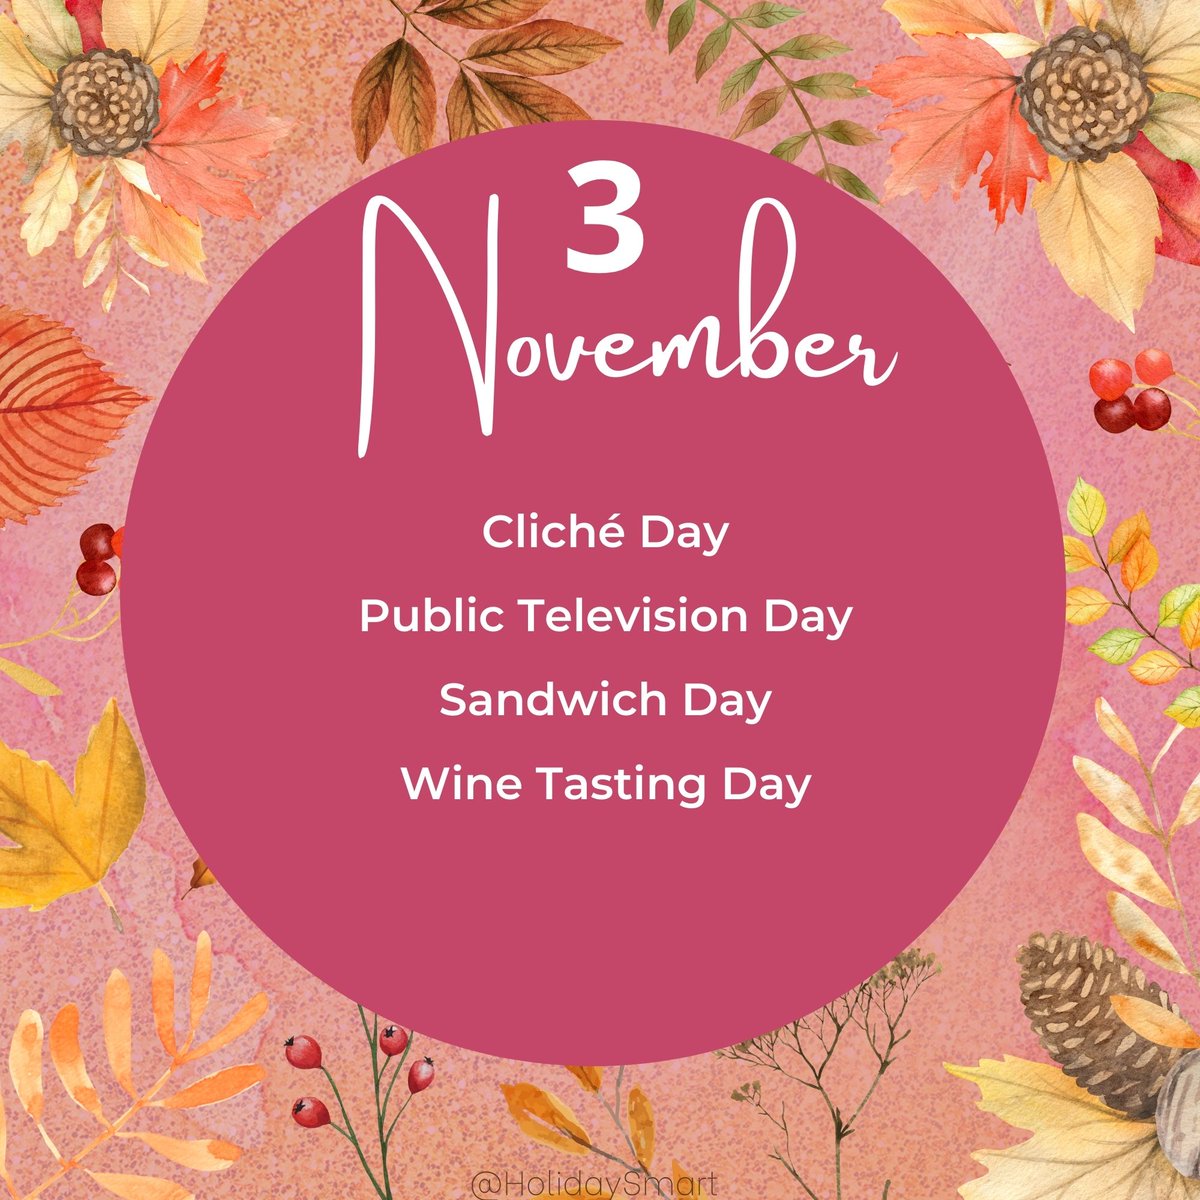 Fun and awareness holidays today
#ClicheDay
#PublicTelevisionDay
#SandwichDay
#WineTastingDay
holidaysmart.com/calendars/day/…

#HolidaySmart #November3